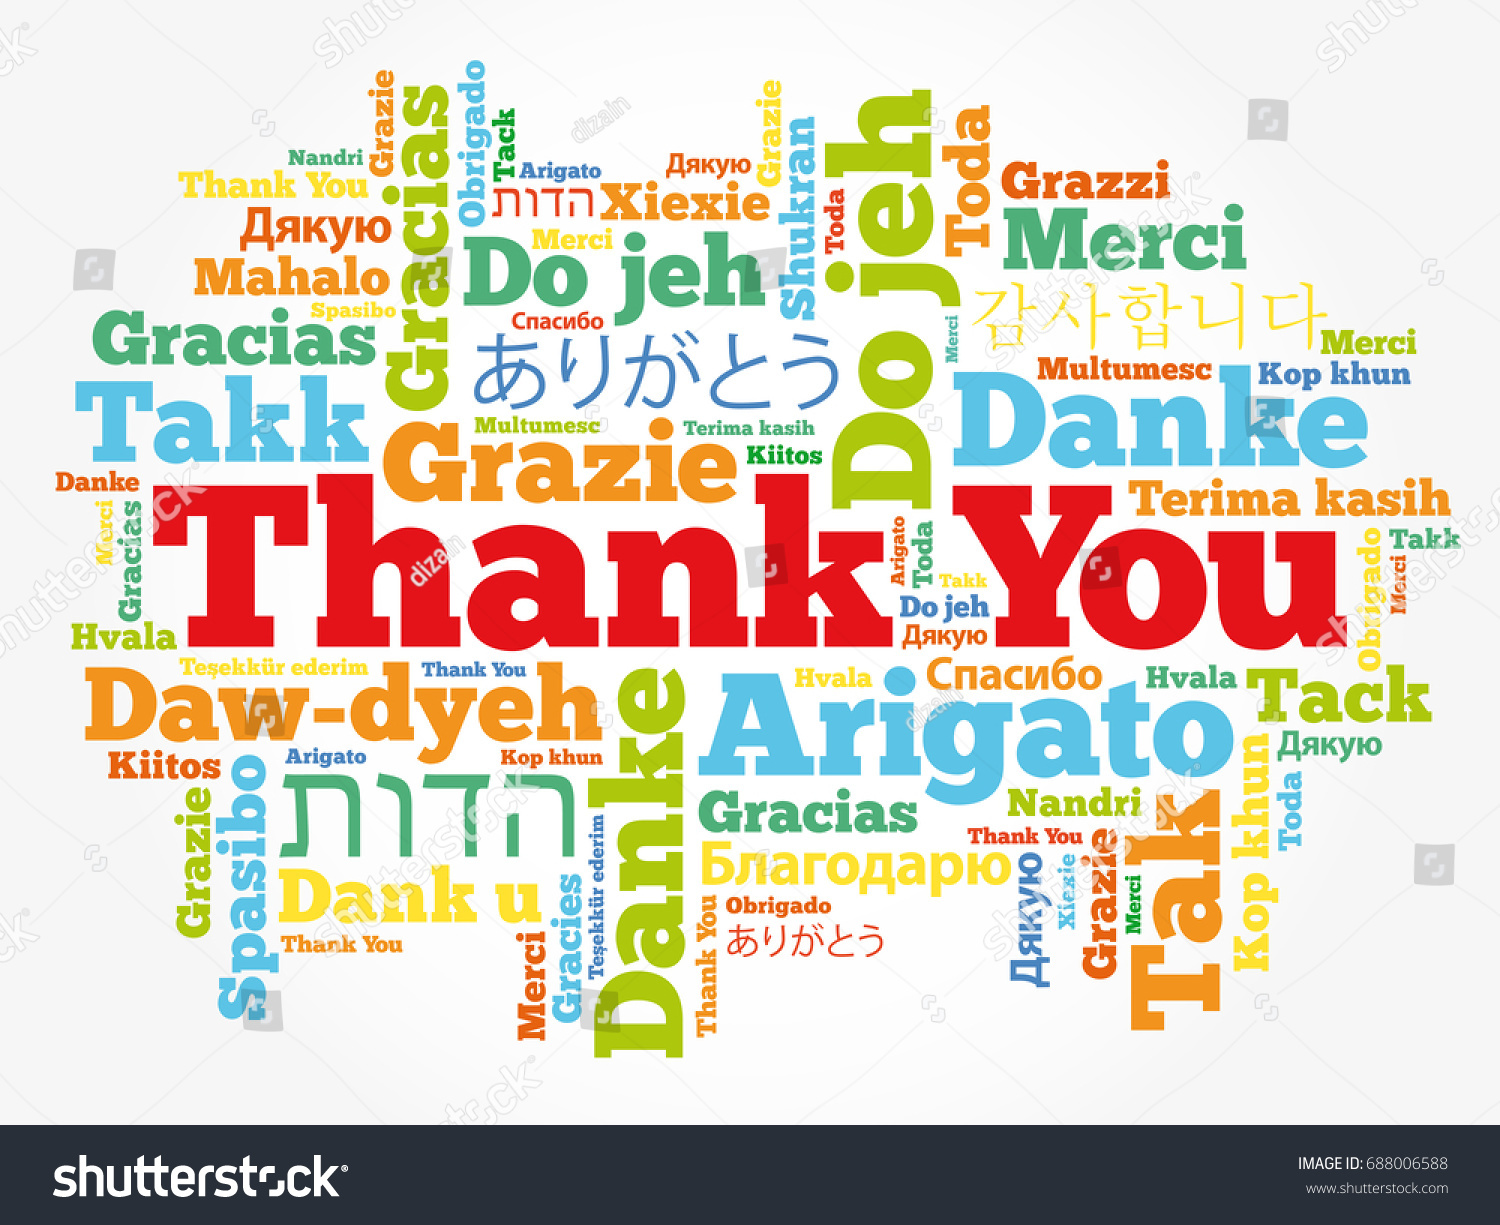 3,660 Thanks different languages Images, Stock Photos & Vectors ...